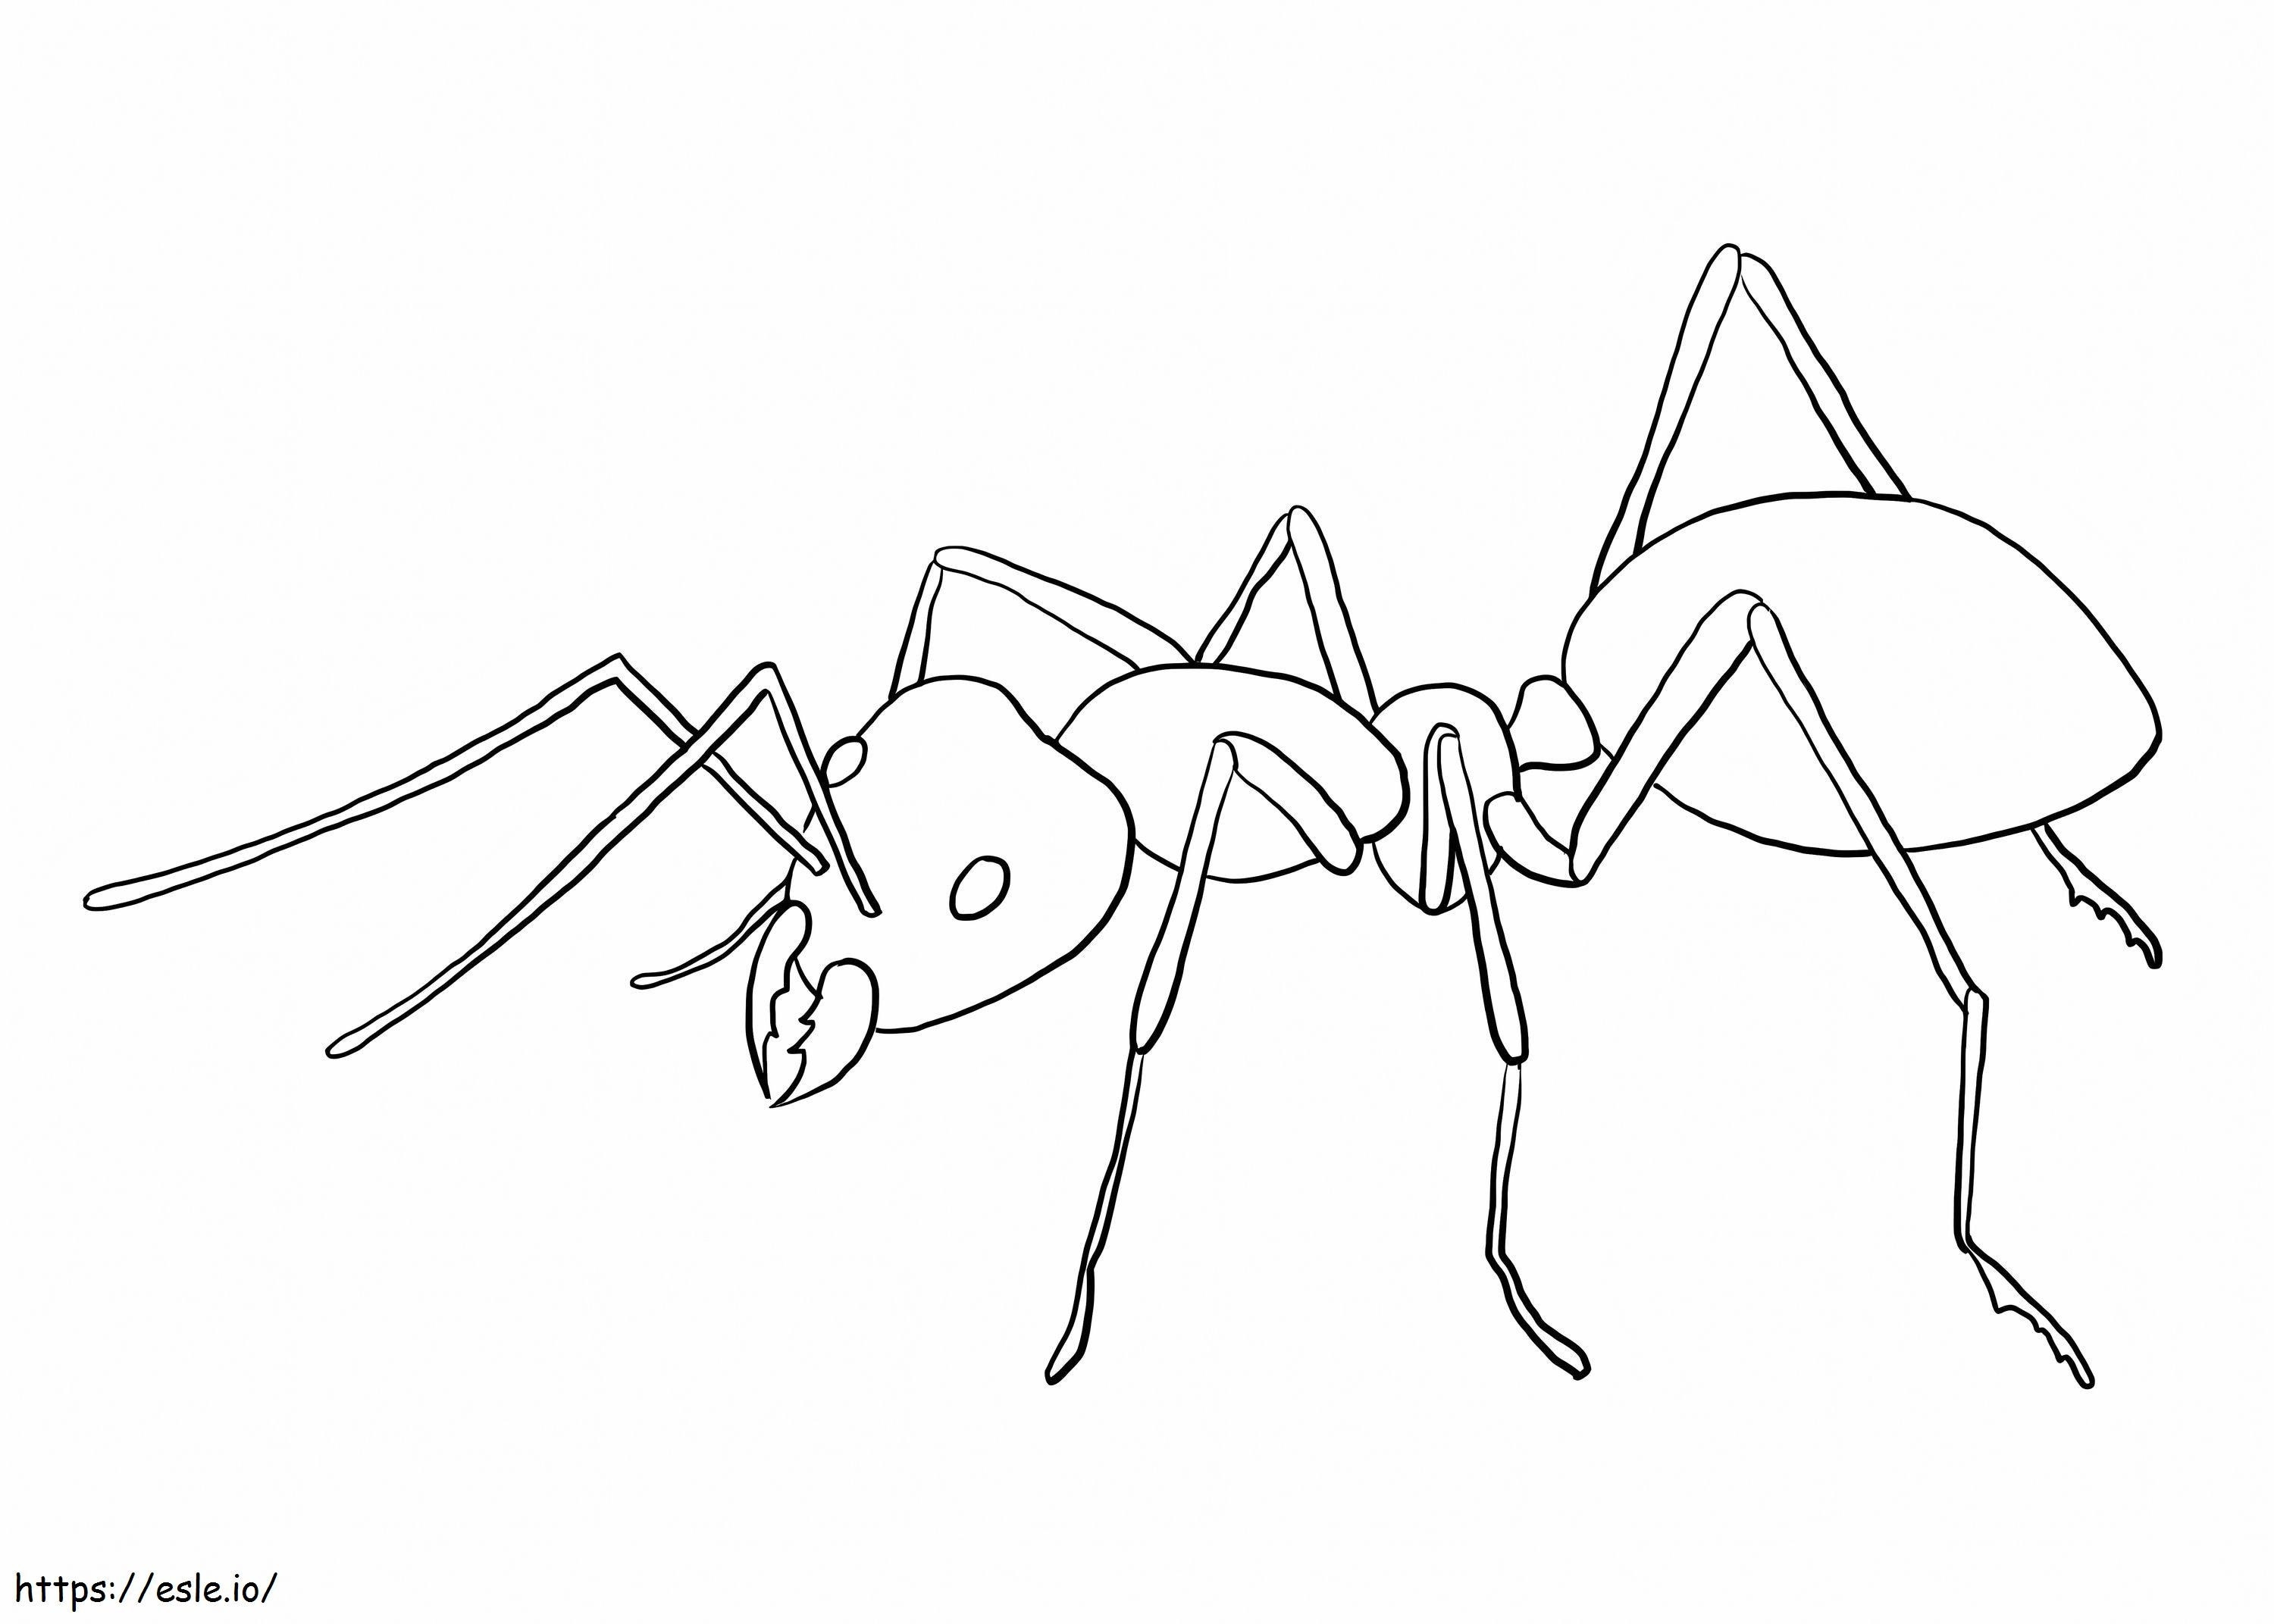 Kaunis Ant värityskuva